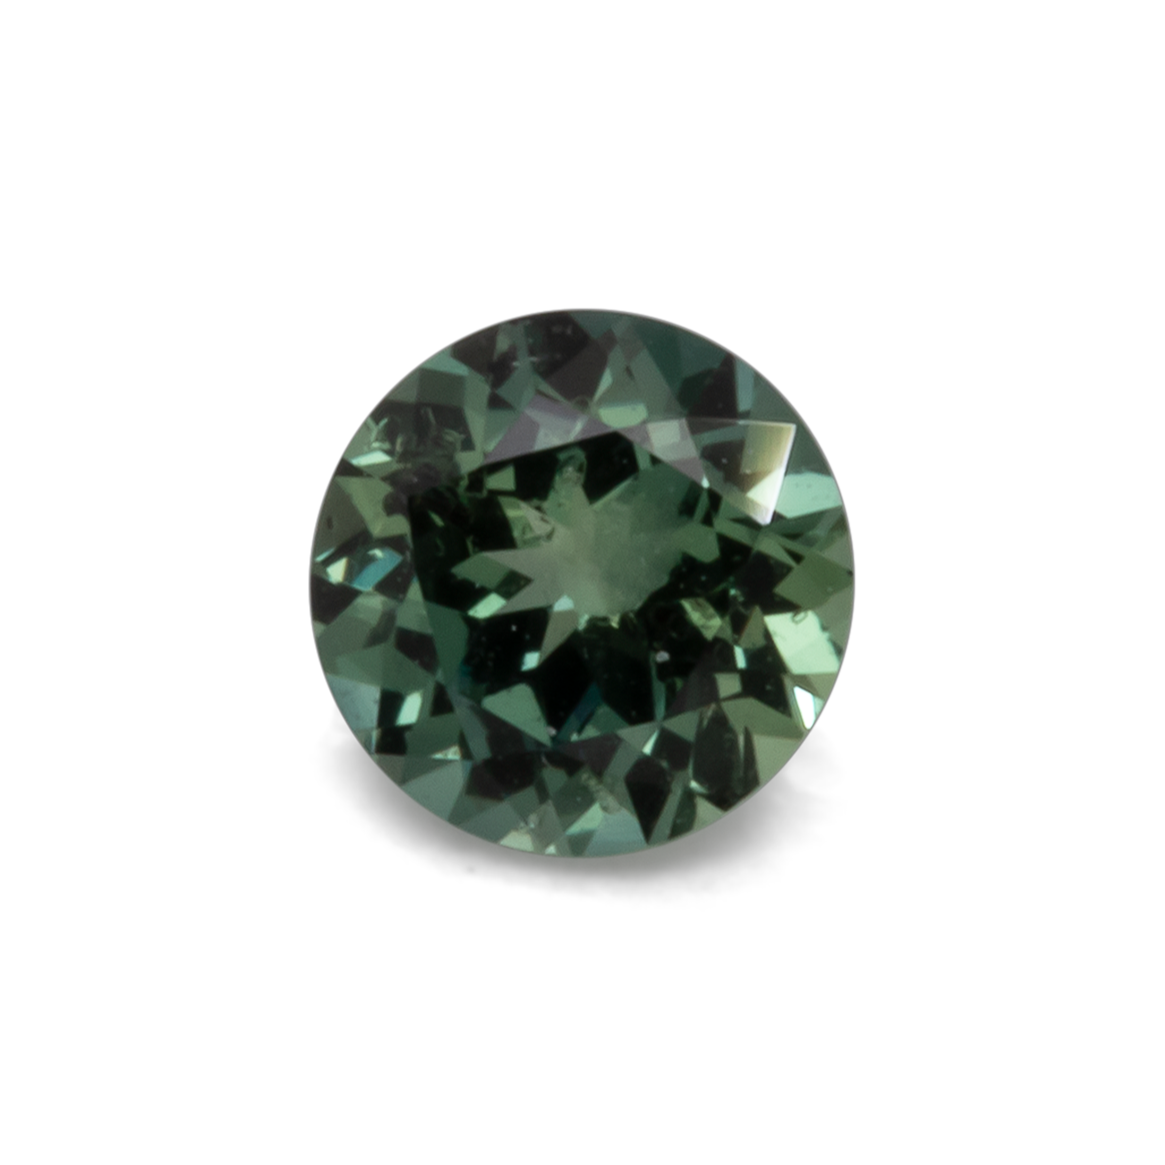 Sapphire - blue/green, round, 4.1x4.1 mm, 0.30 cts, No. XSR11211